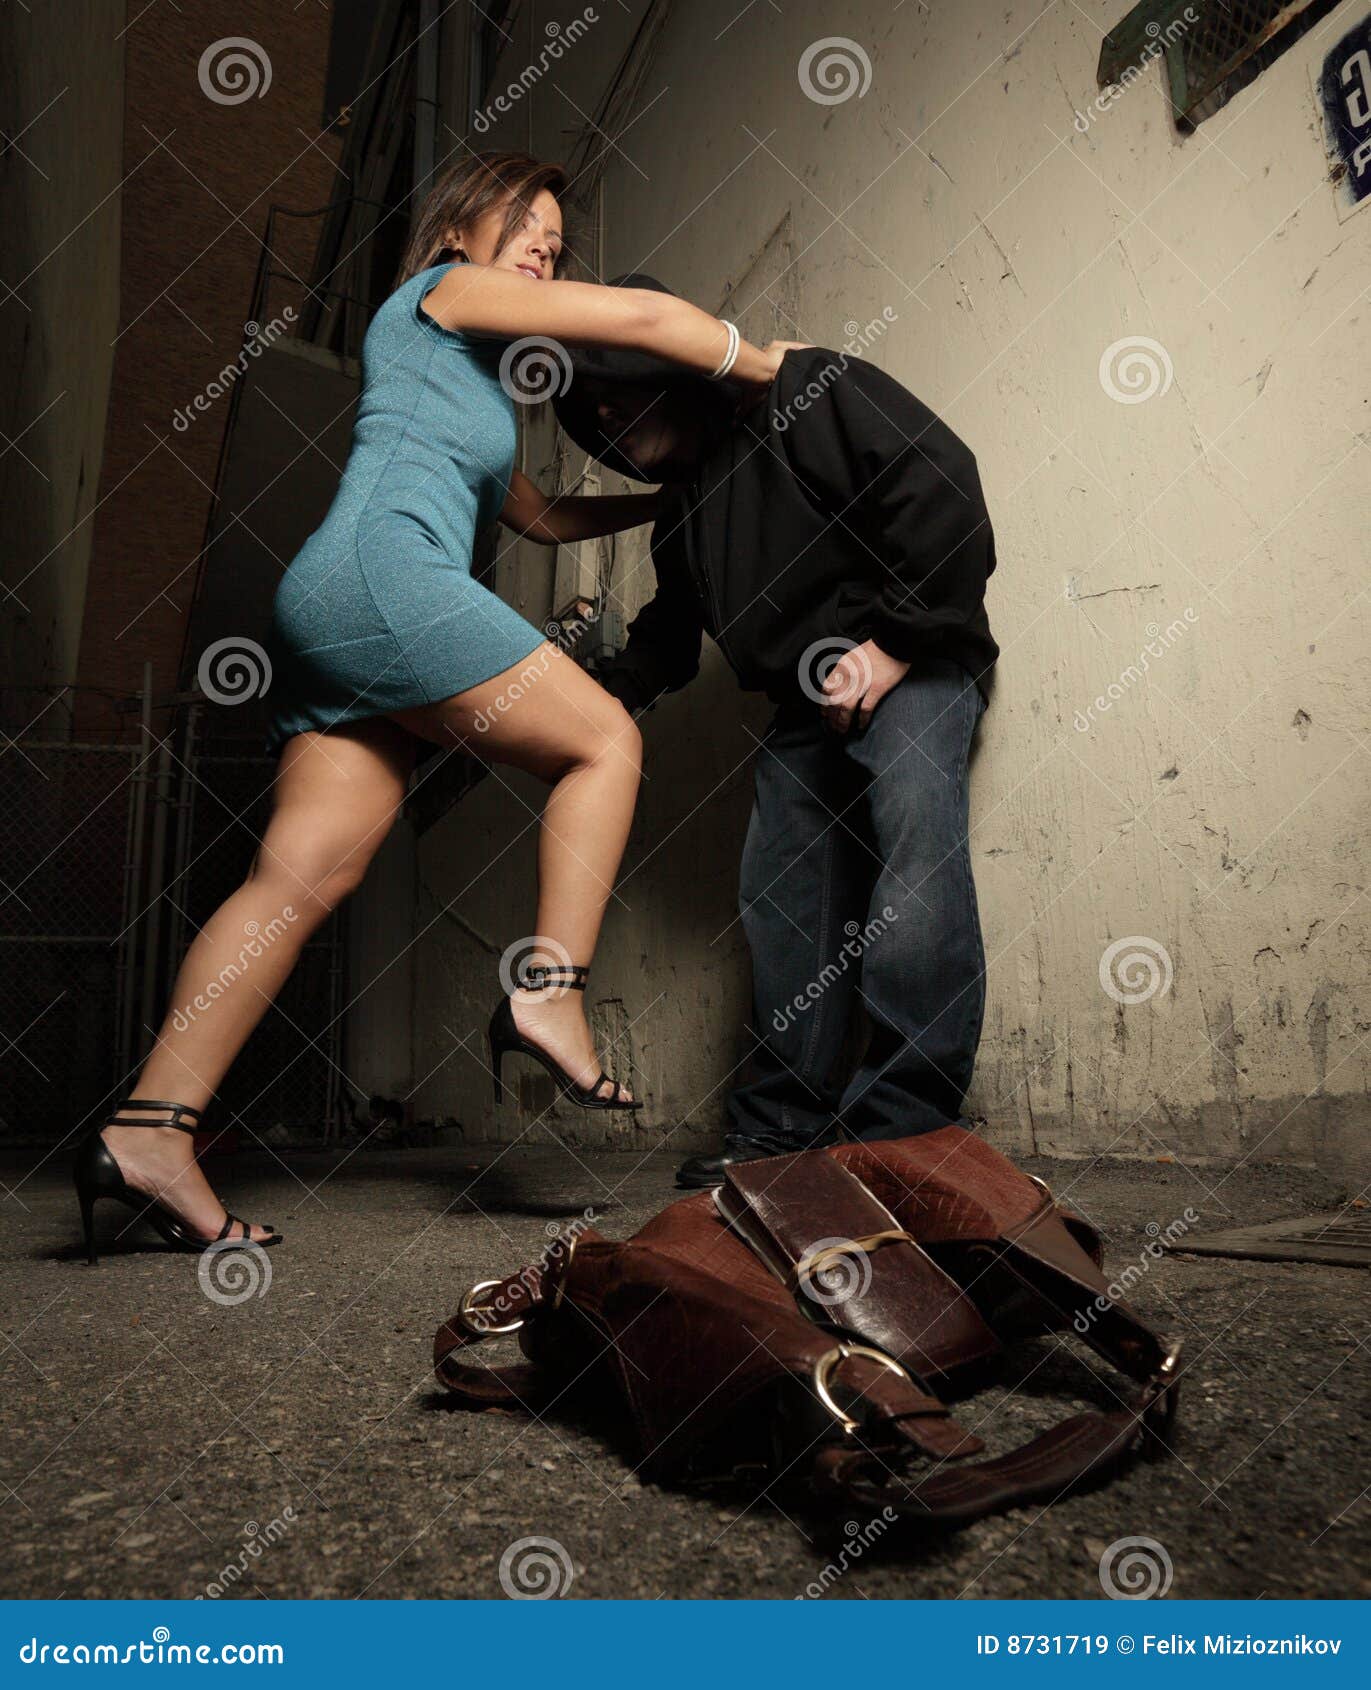 Women beating up men pictures